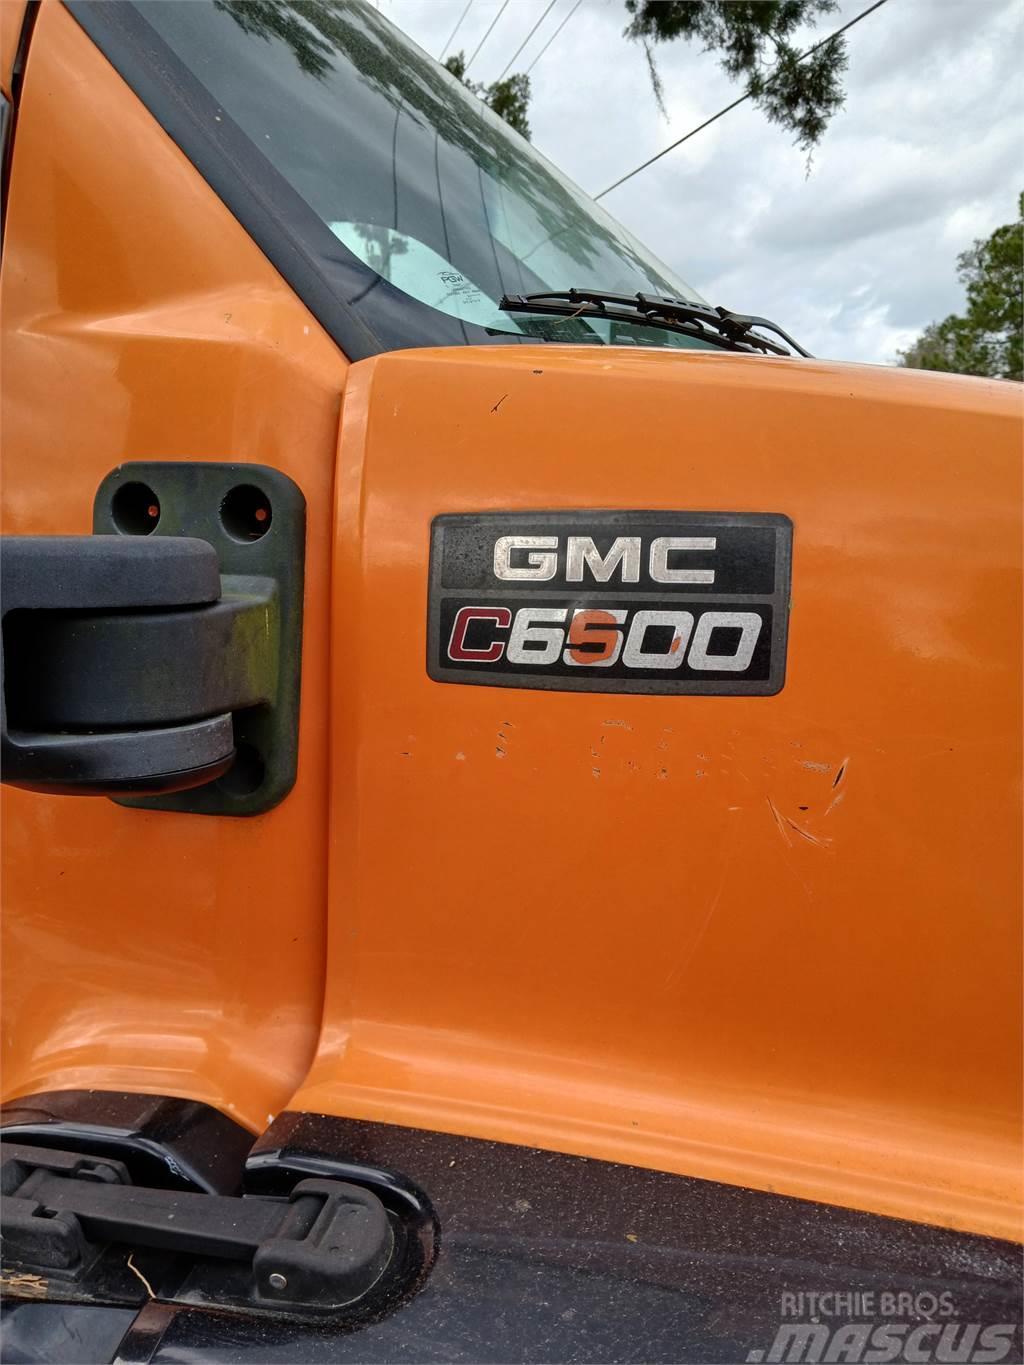 GMC C6500 Wood chip trucks